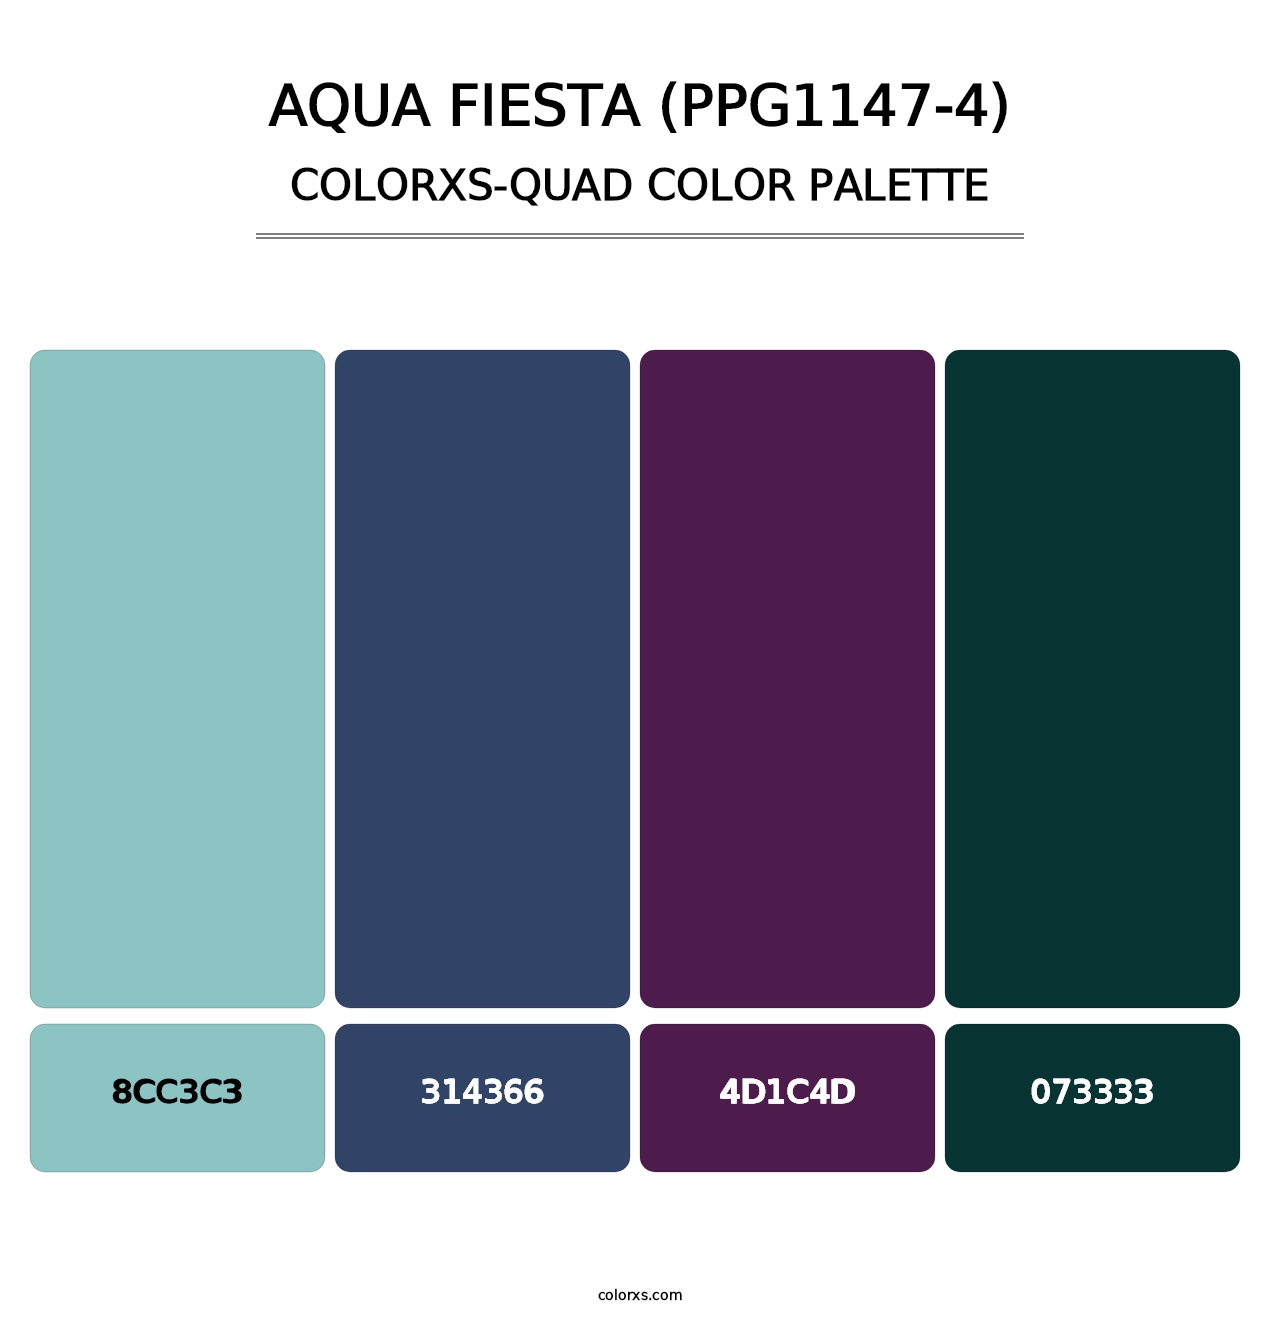 Aqua Fiesta (PPG1147-4) - Colorxs Quad Palette